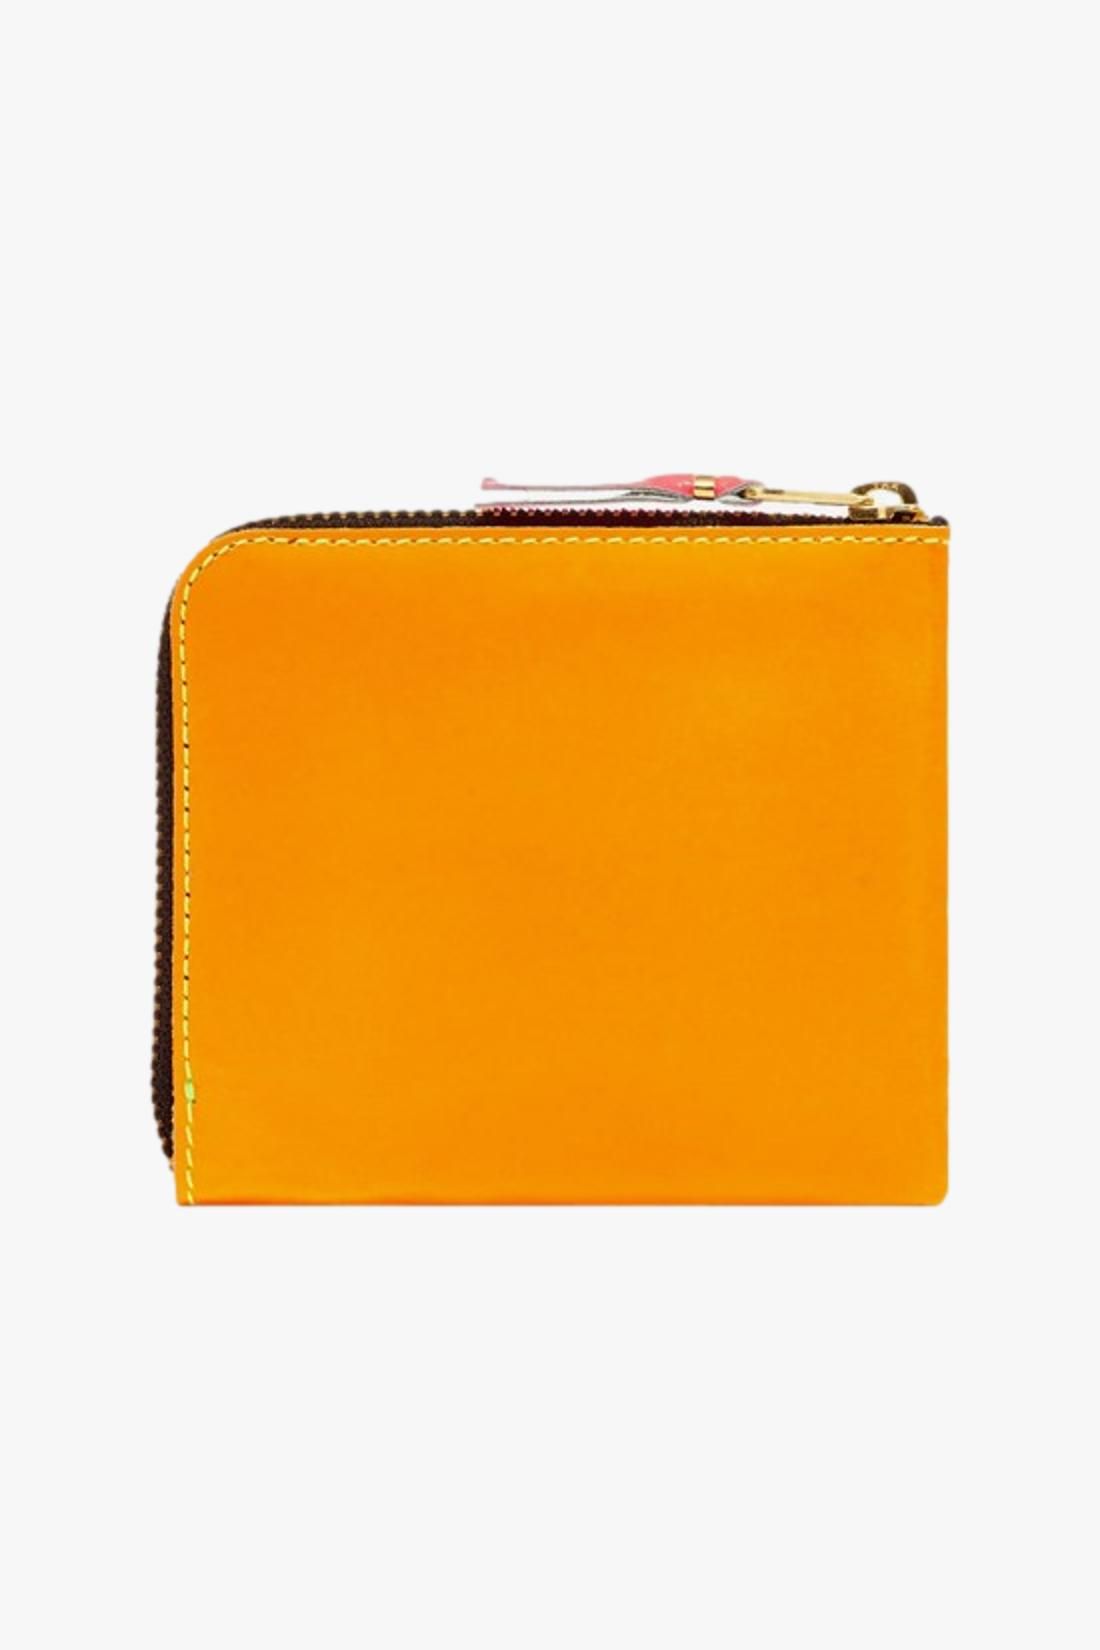 COMME DES GARÇONS WALLETS / Cdg classic leather wallet Yellow light orange